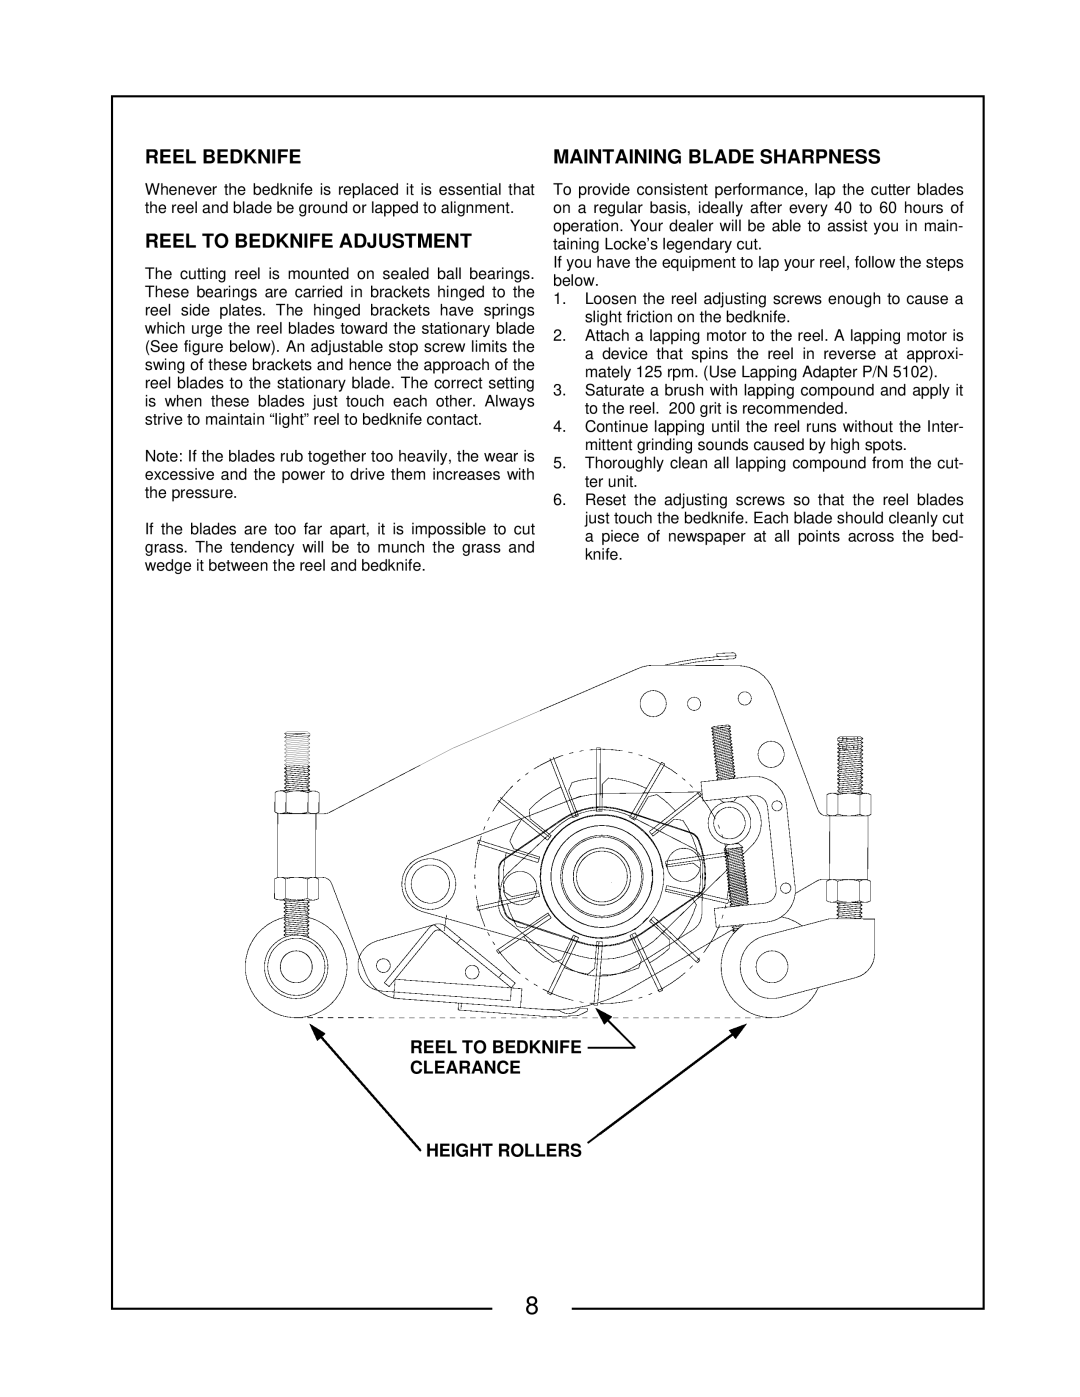 Locke GT-126, GT-122 manual Reel To Bedknife Clearance Height Rollers 